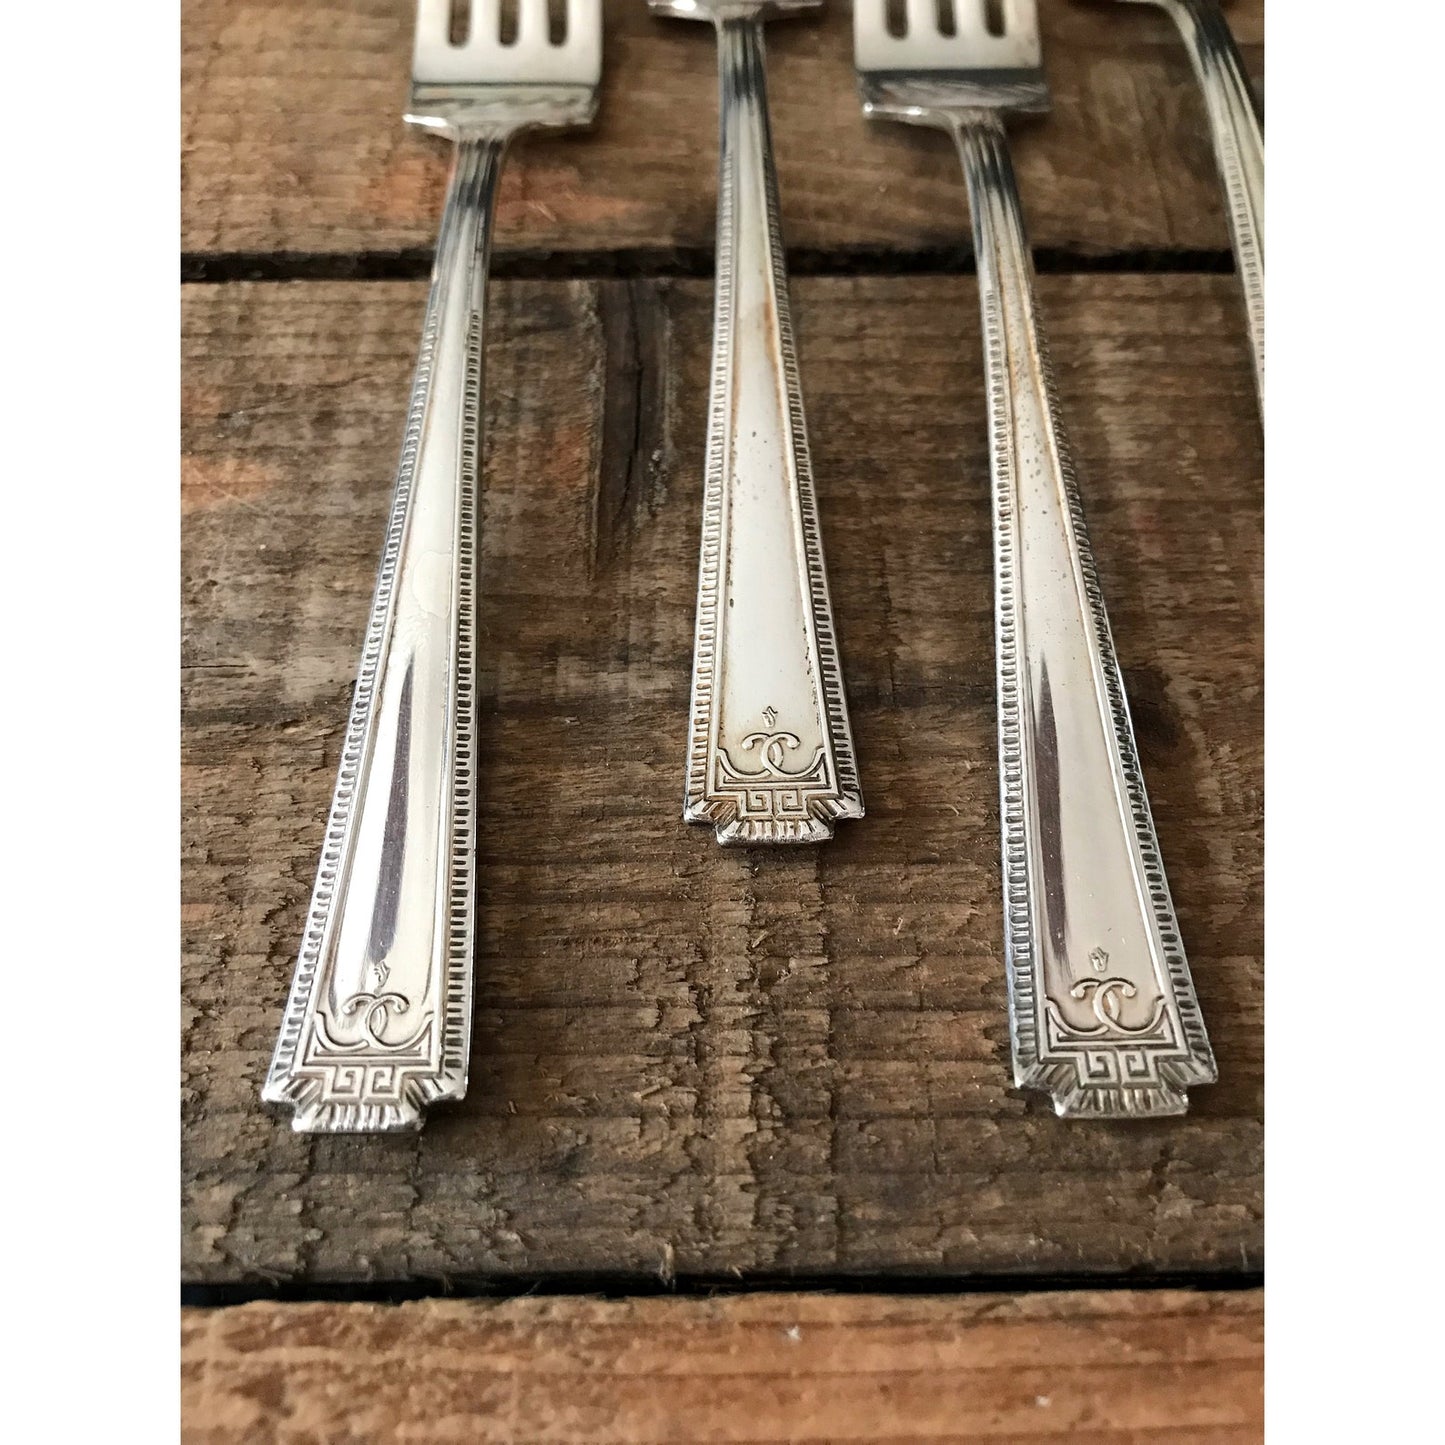 Viceroy Plate Silver - Plate Dinner Fork